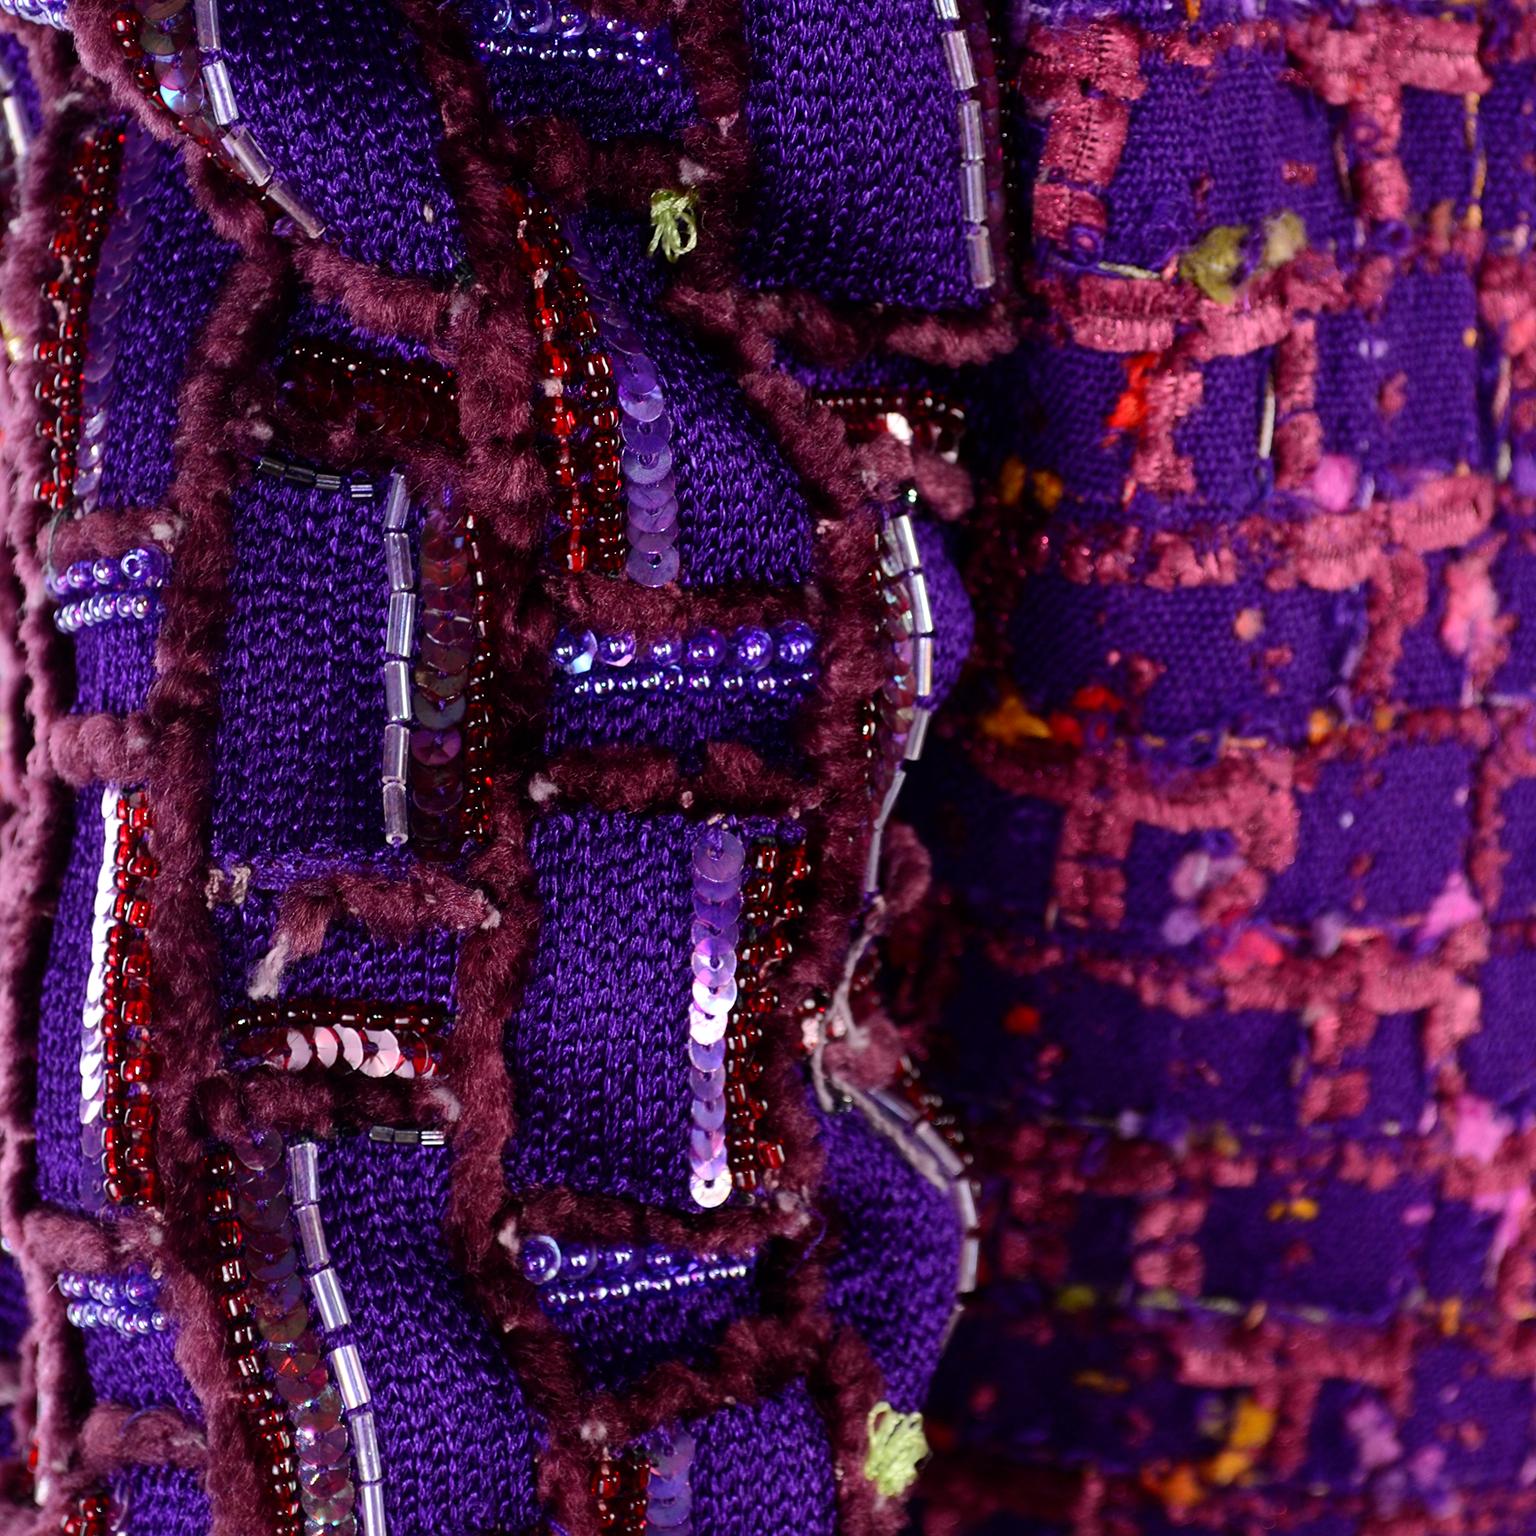 purple sequin blazer